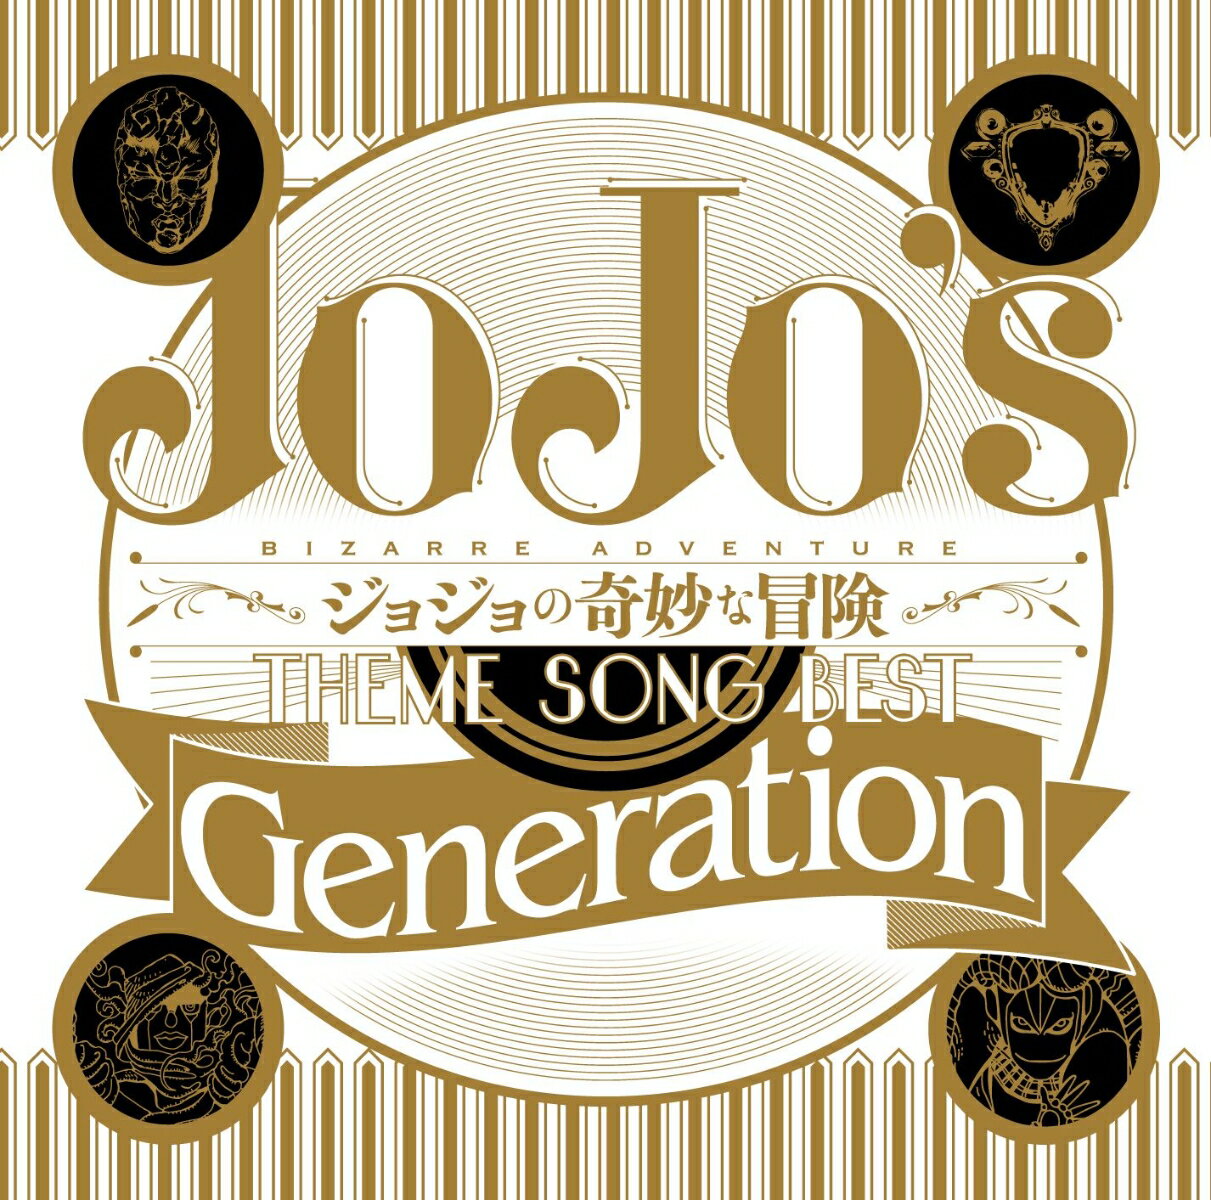 CD, アニメ TV THEME SONG BEST Generation () 